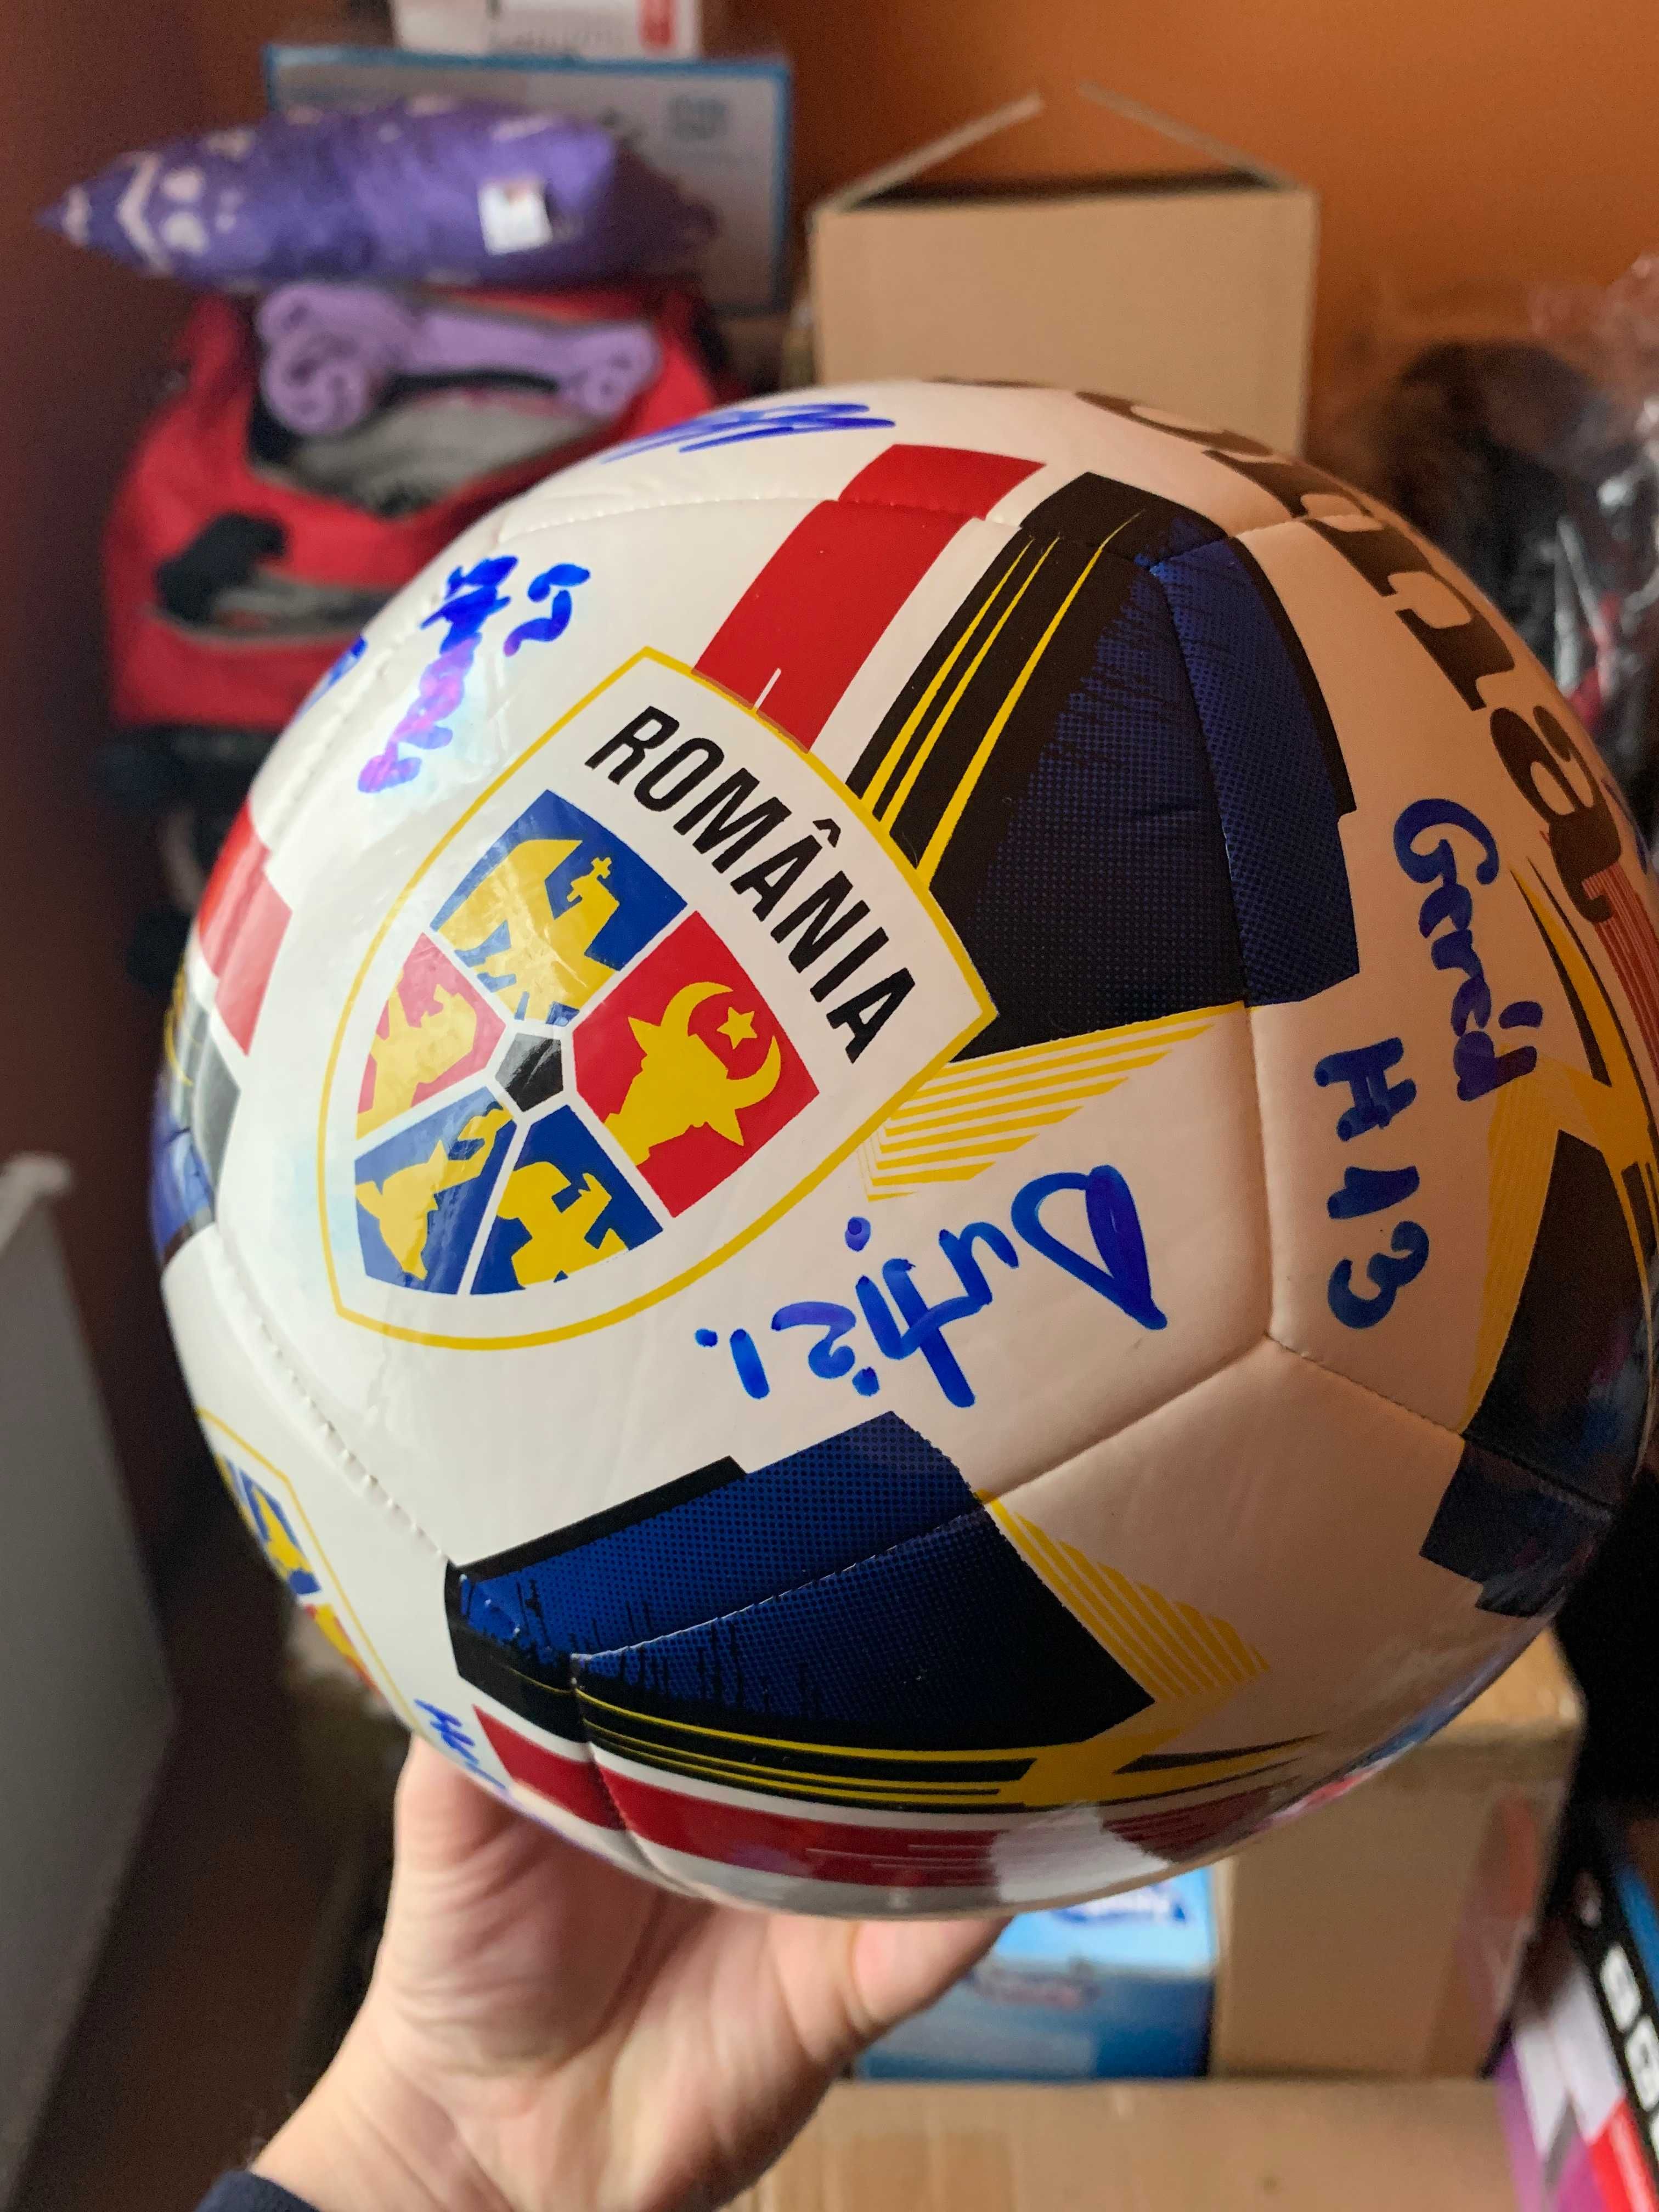 Minge Autograf Echipa Fotbal Feminin Romania + alti jucatori